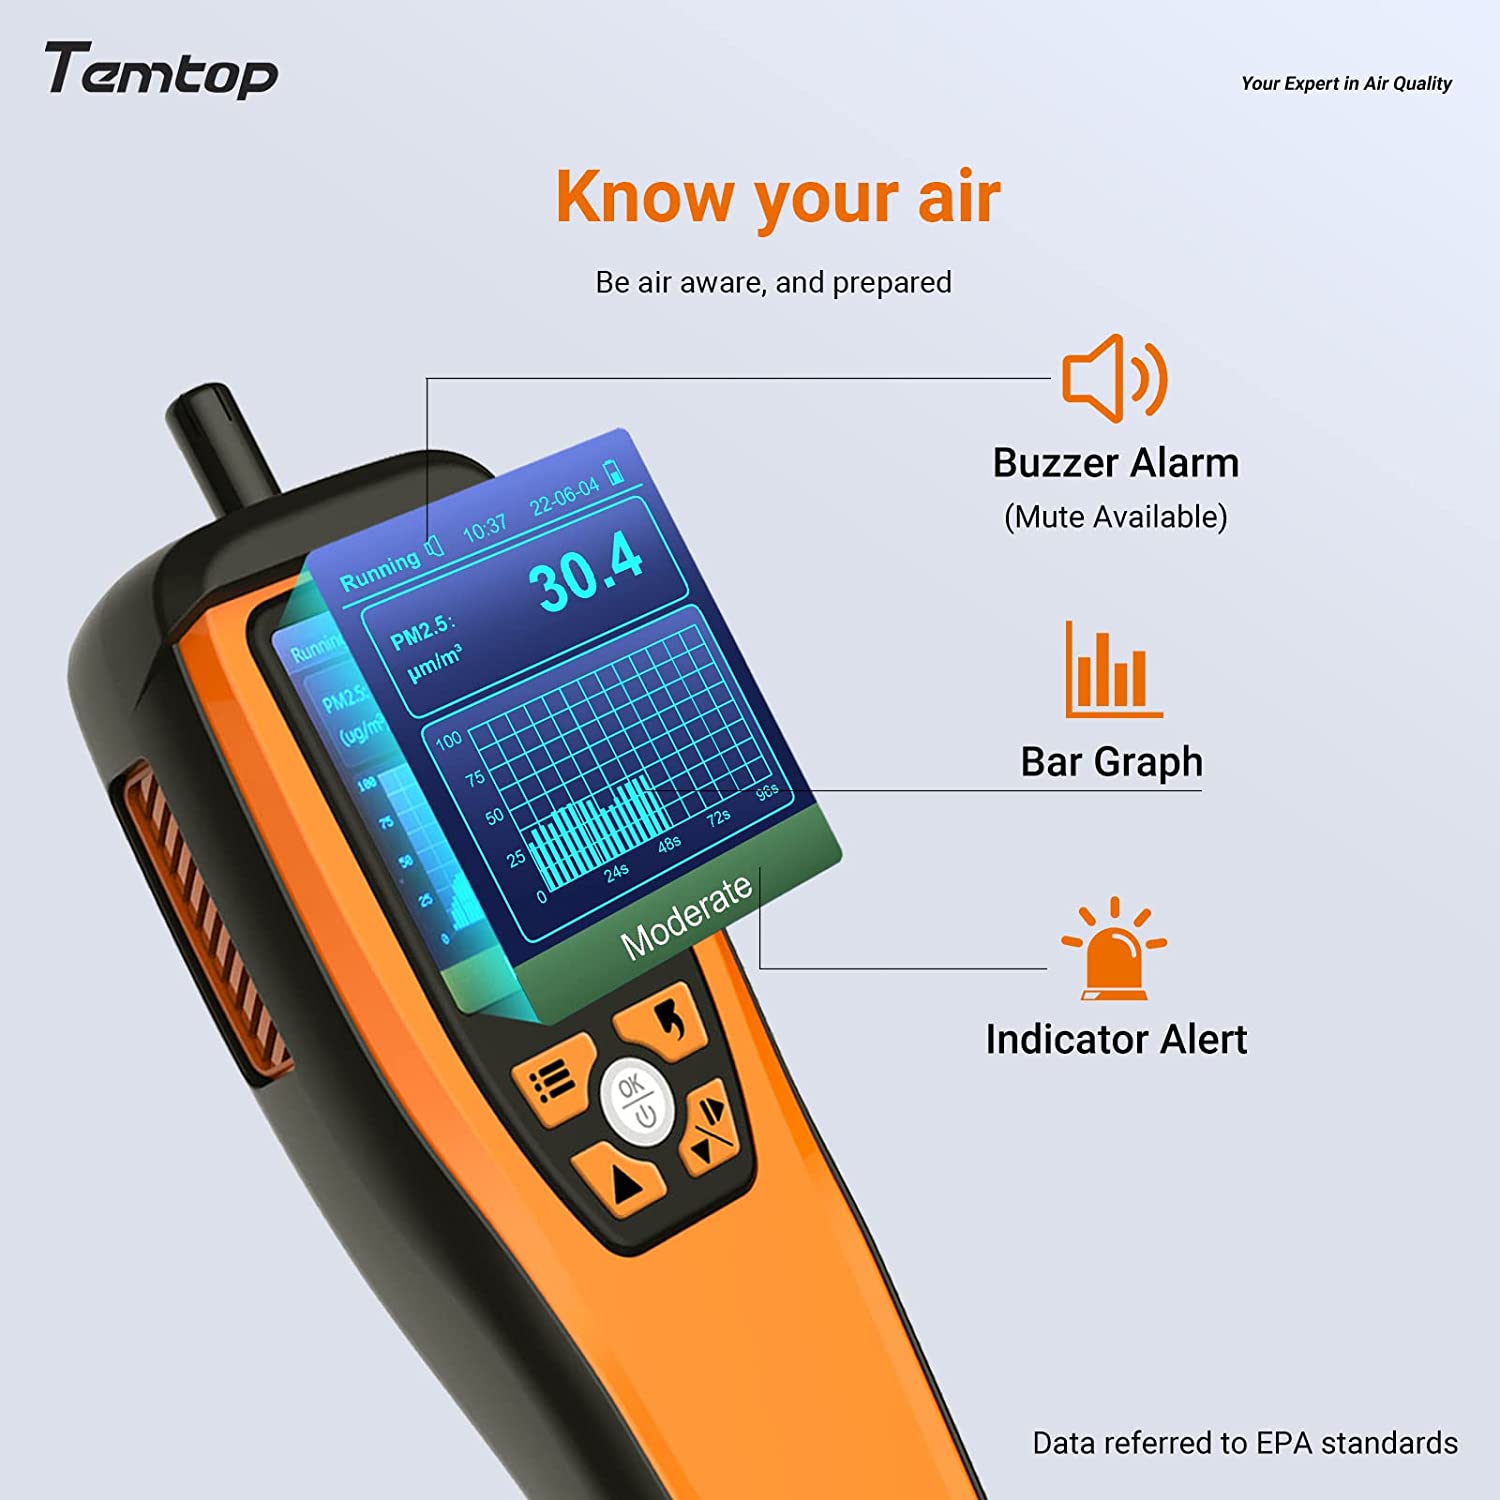 Co2 Detector Monitor, Co2 Carbon Dioxide Air Quality Sensor, Air